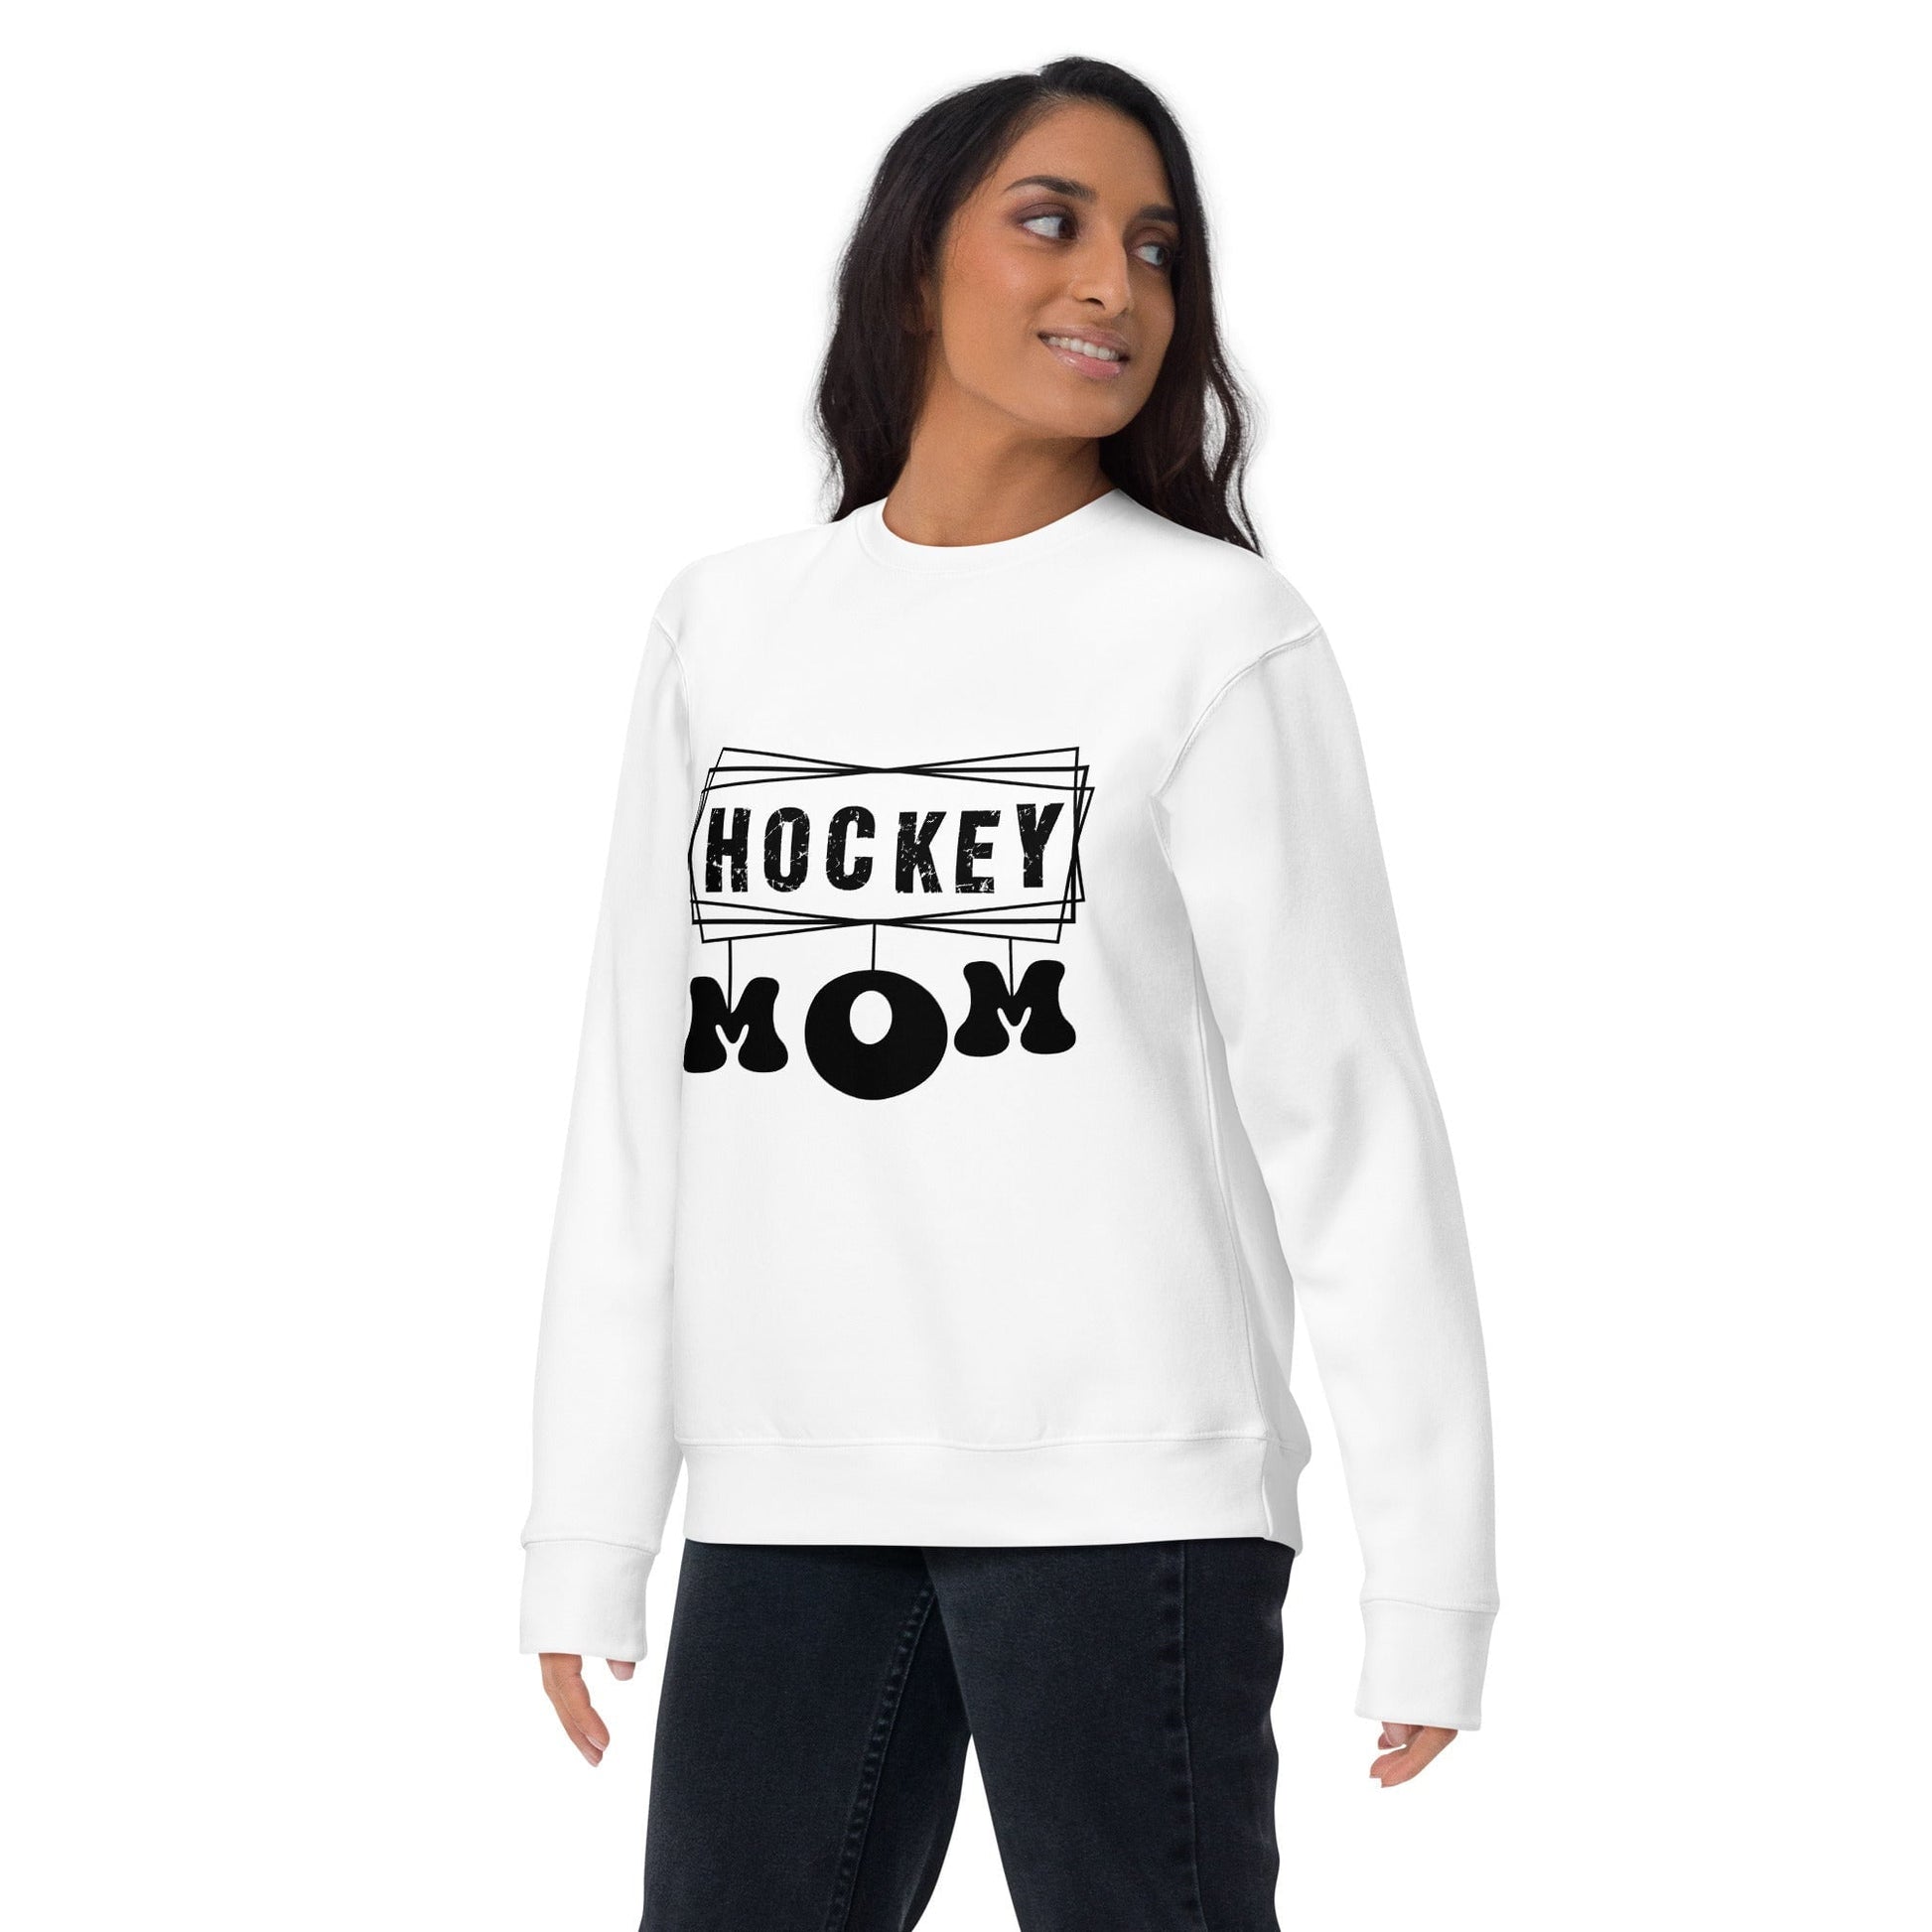 Hockey Mom sweatshirt